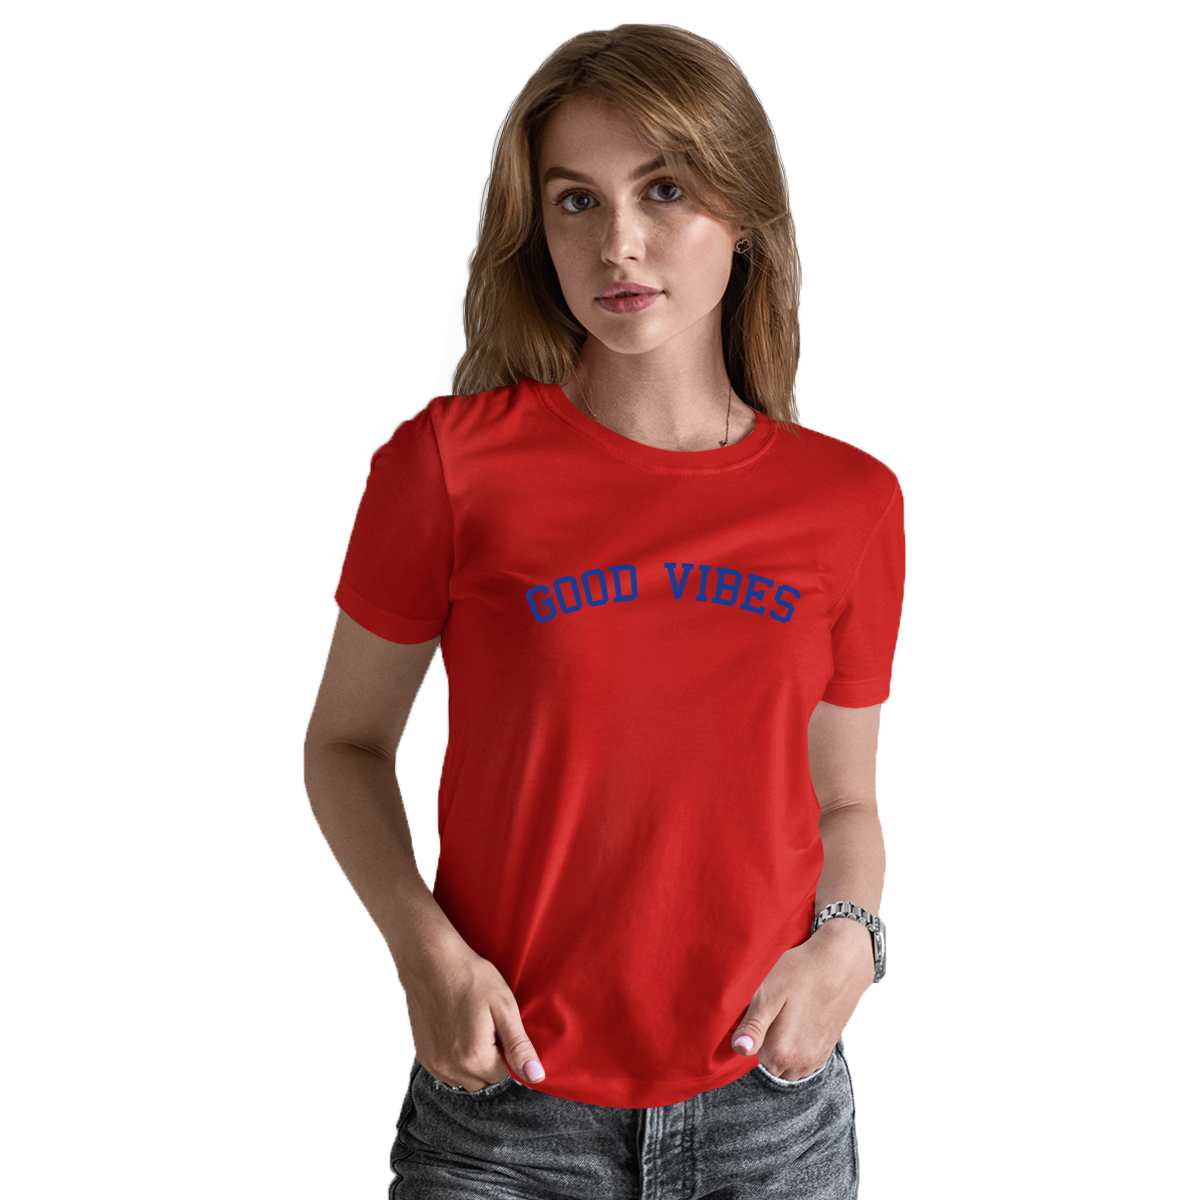 Good Vibes Women's T-shirt | Red